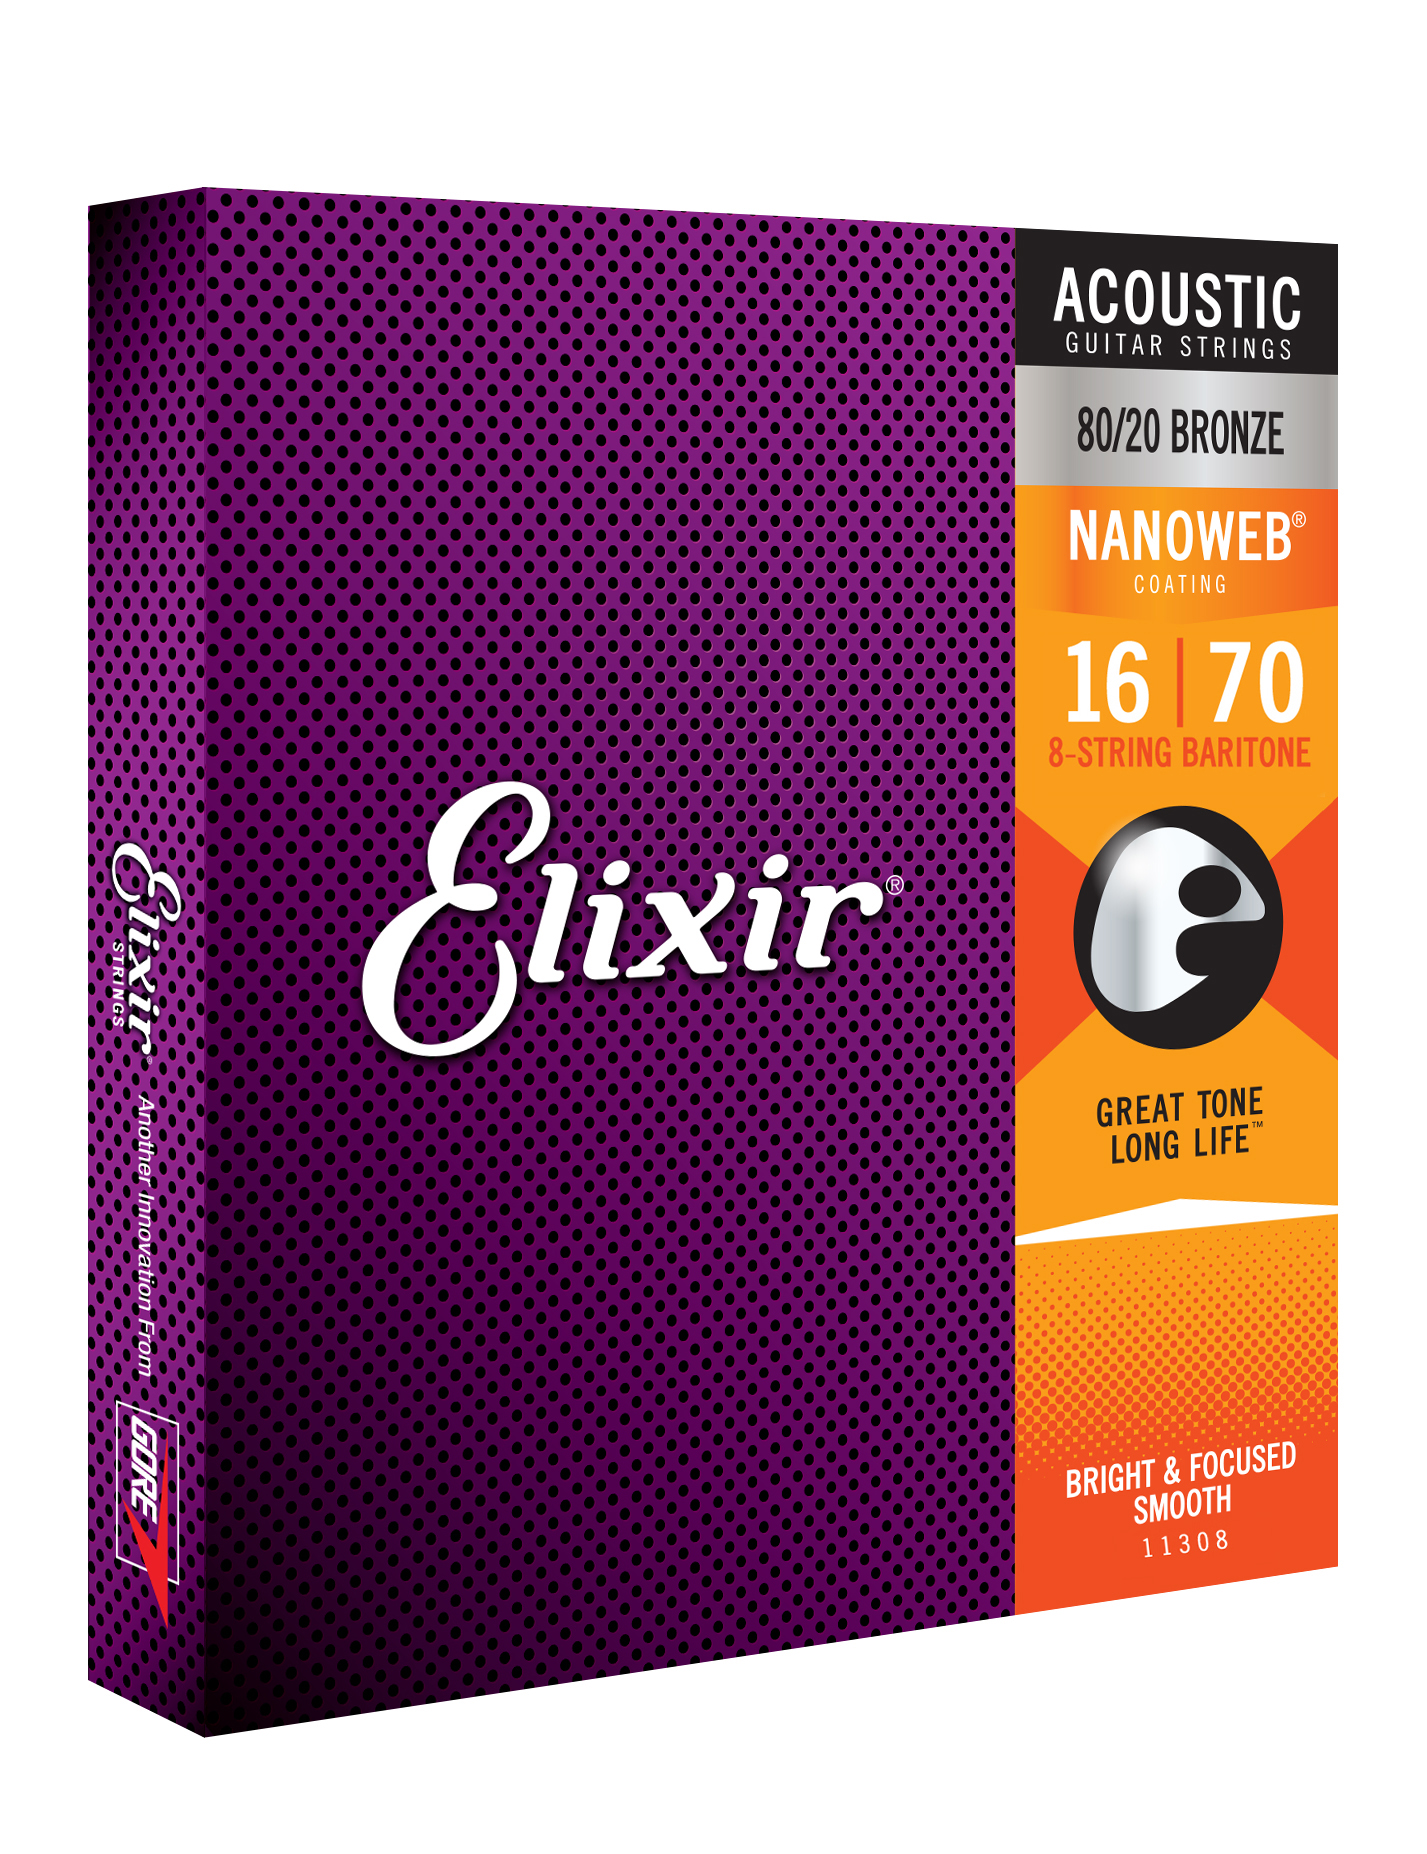 Elixir 11308 8-string Nanoweb 80/20 Bronze Acoustic Guitar 8c Baritone 16-70 - Westerngitarre Saiten - Variation 1